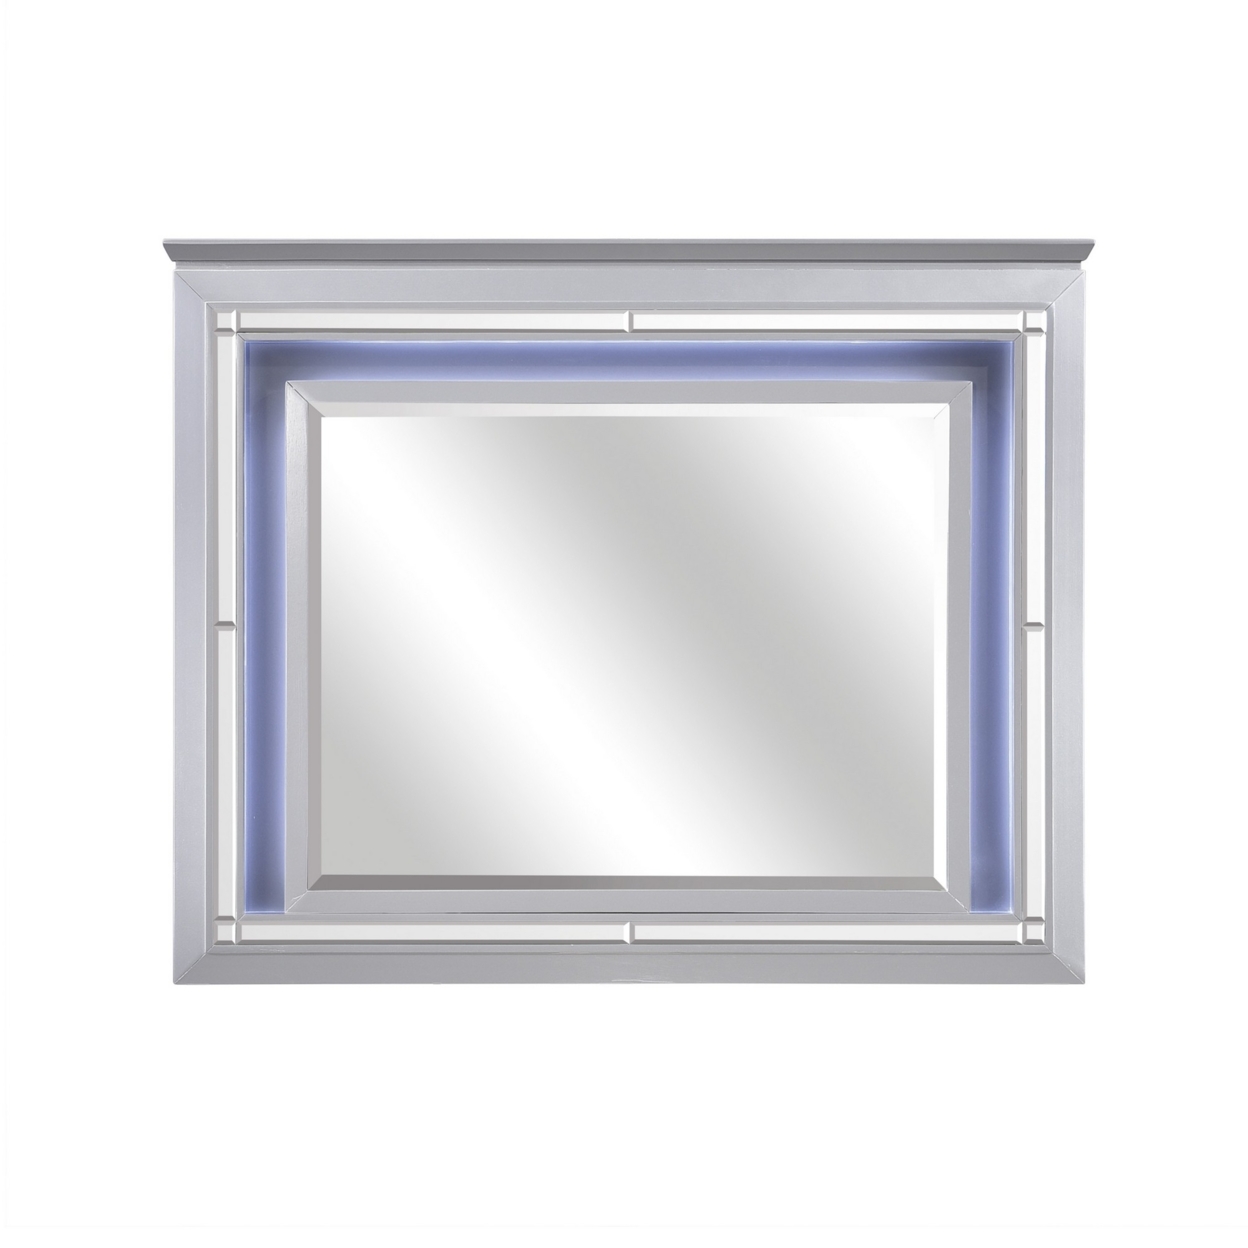 Contemporary Style Beveled Edge Mirror With LED Light, Silver- Saltoro Sherpi